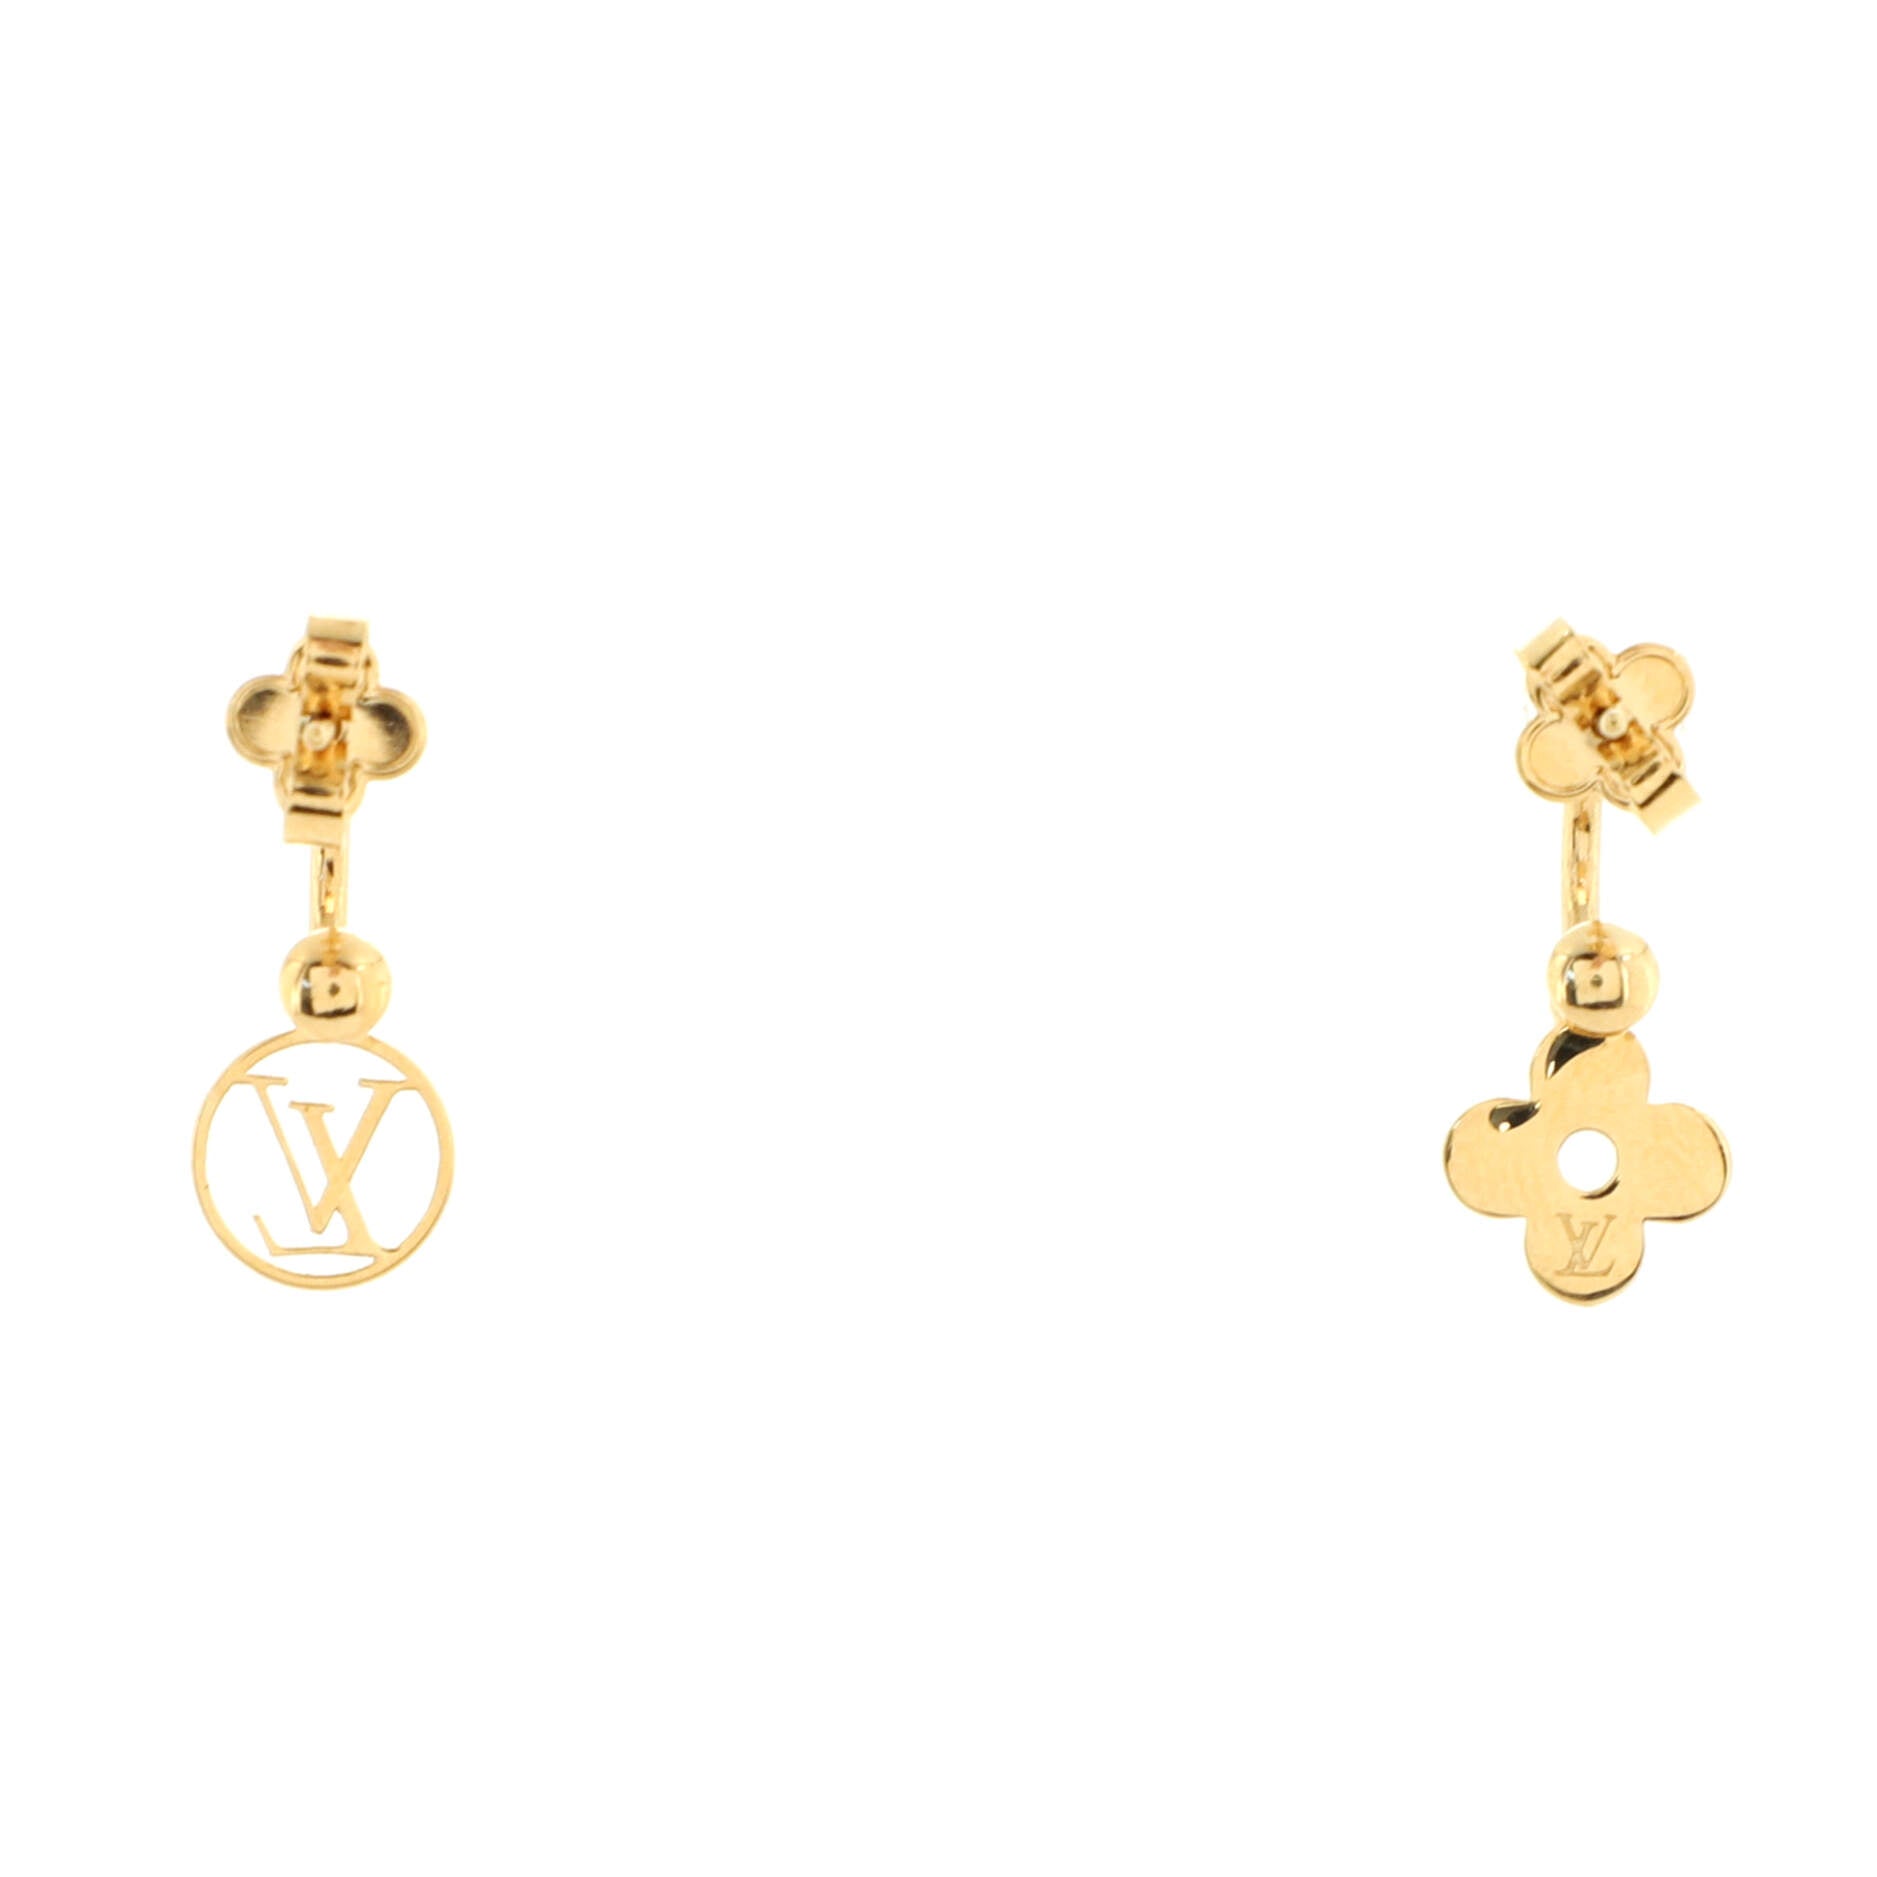 Shop Louis Vuitton Blooming earrings (M64859) by ESTYOKOHAMA